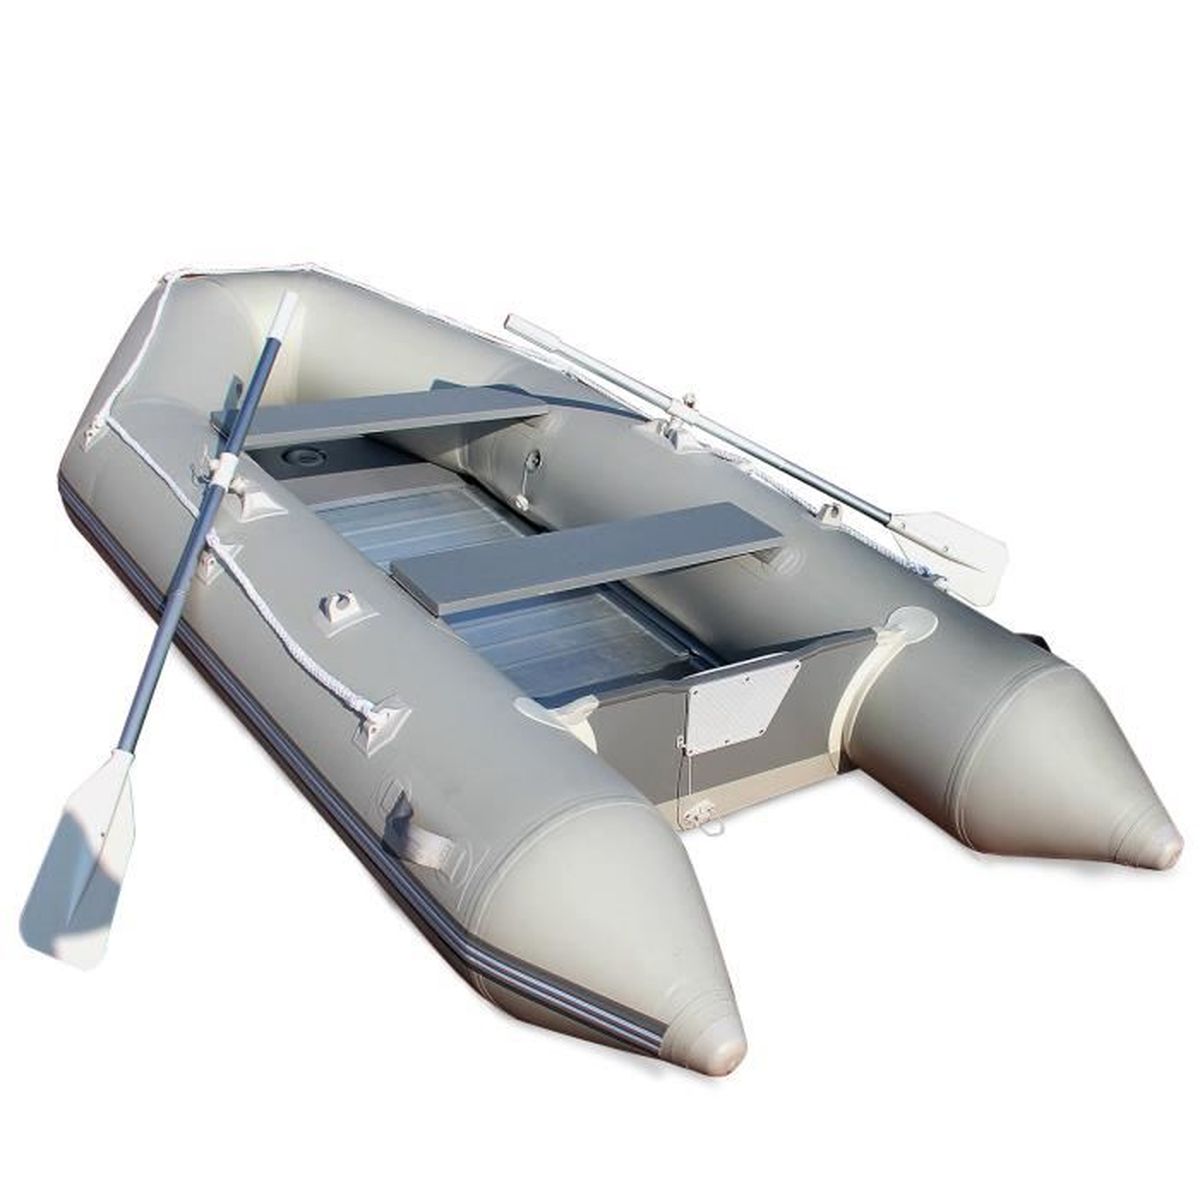 Алиэкспресс купить лодочный. Лодка надувная Хайпалон фарватер 4,3 метра алюминиевый пол. Лодка надувная ПВХ (алюминиевый пол) x-Boat x-320. Лодка ПВХ 3 20. Надувная лодка Rima III Inflatable Dinghy 100''.